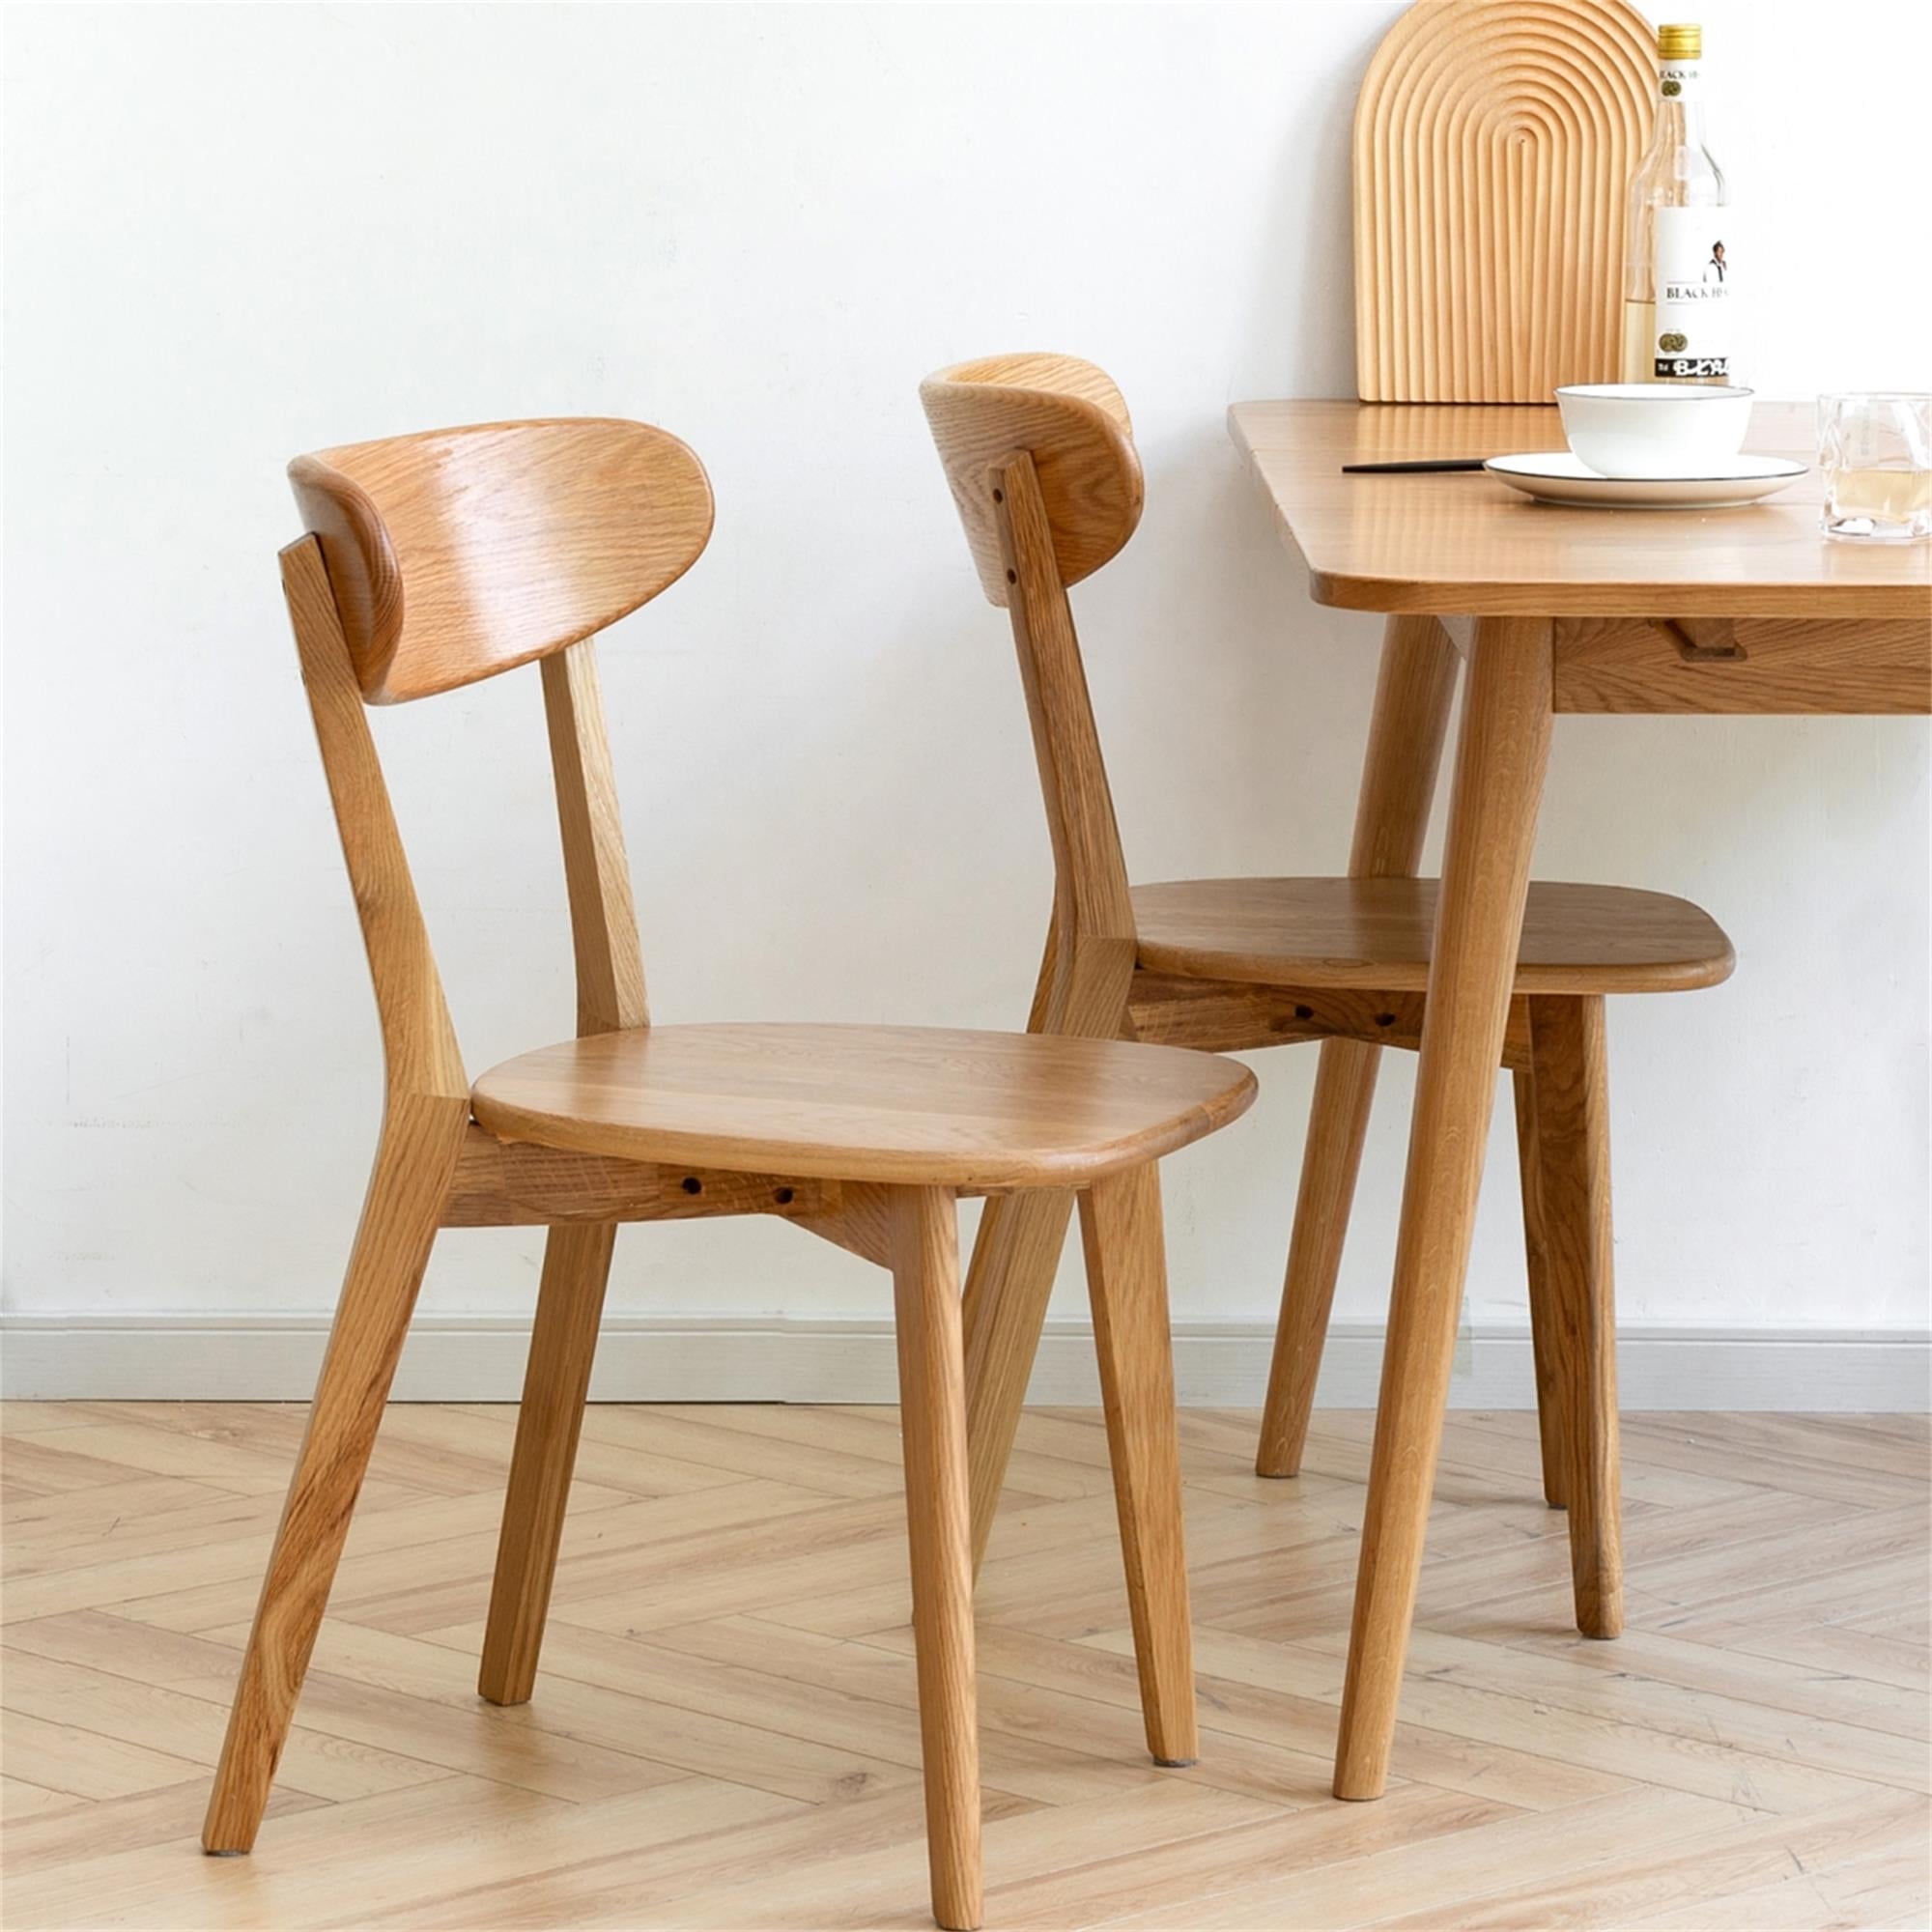 Resenkos Set of 4 Modern Farmhouse Wood Dining Chair with Oak Finish, 4-Pcs  Set Natural